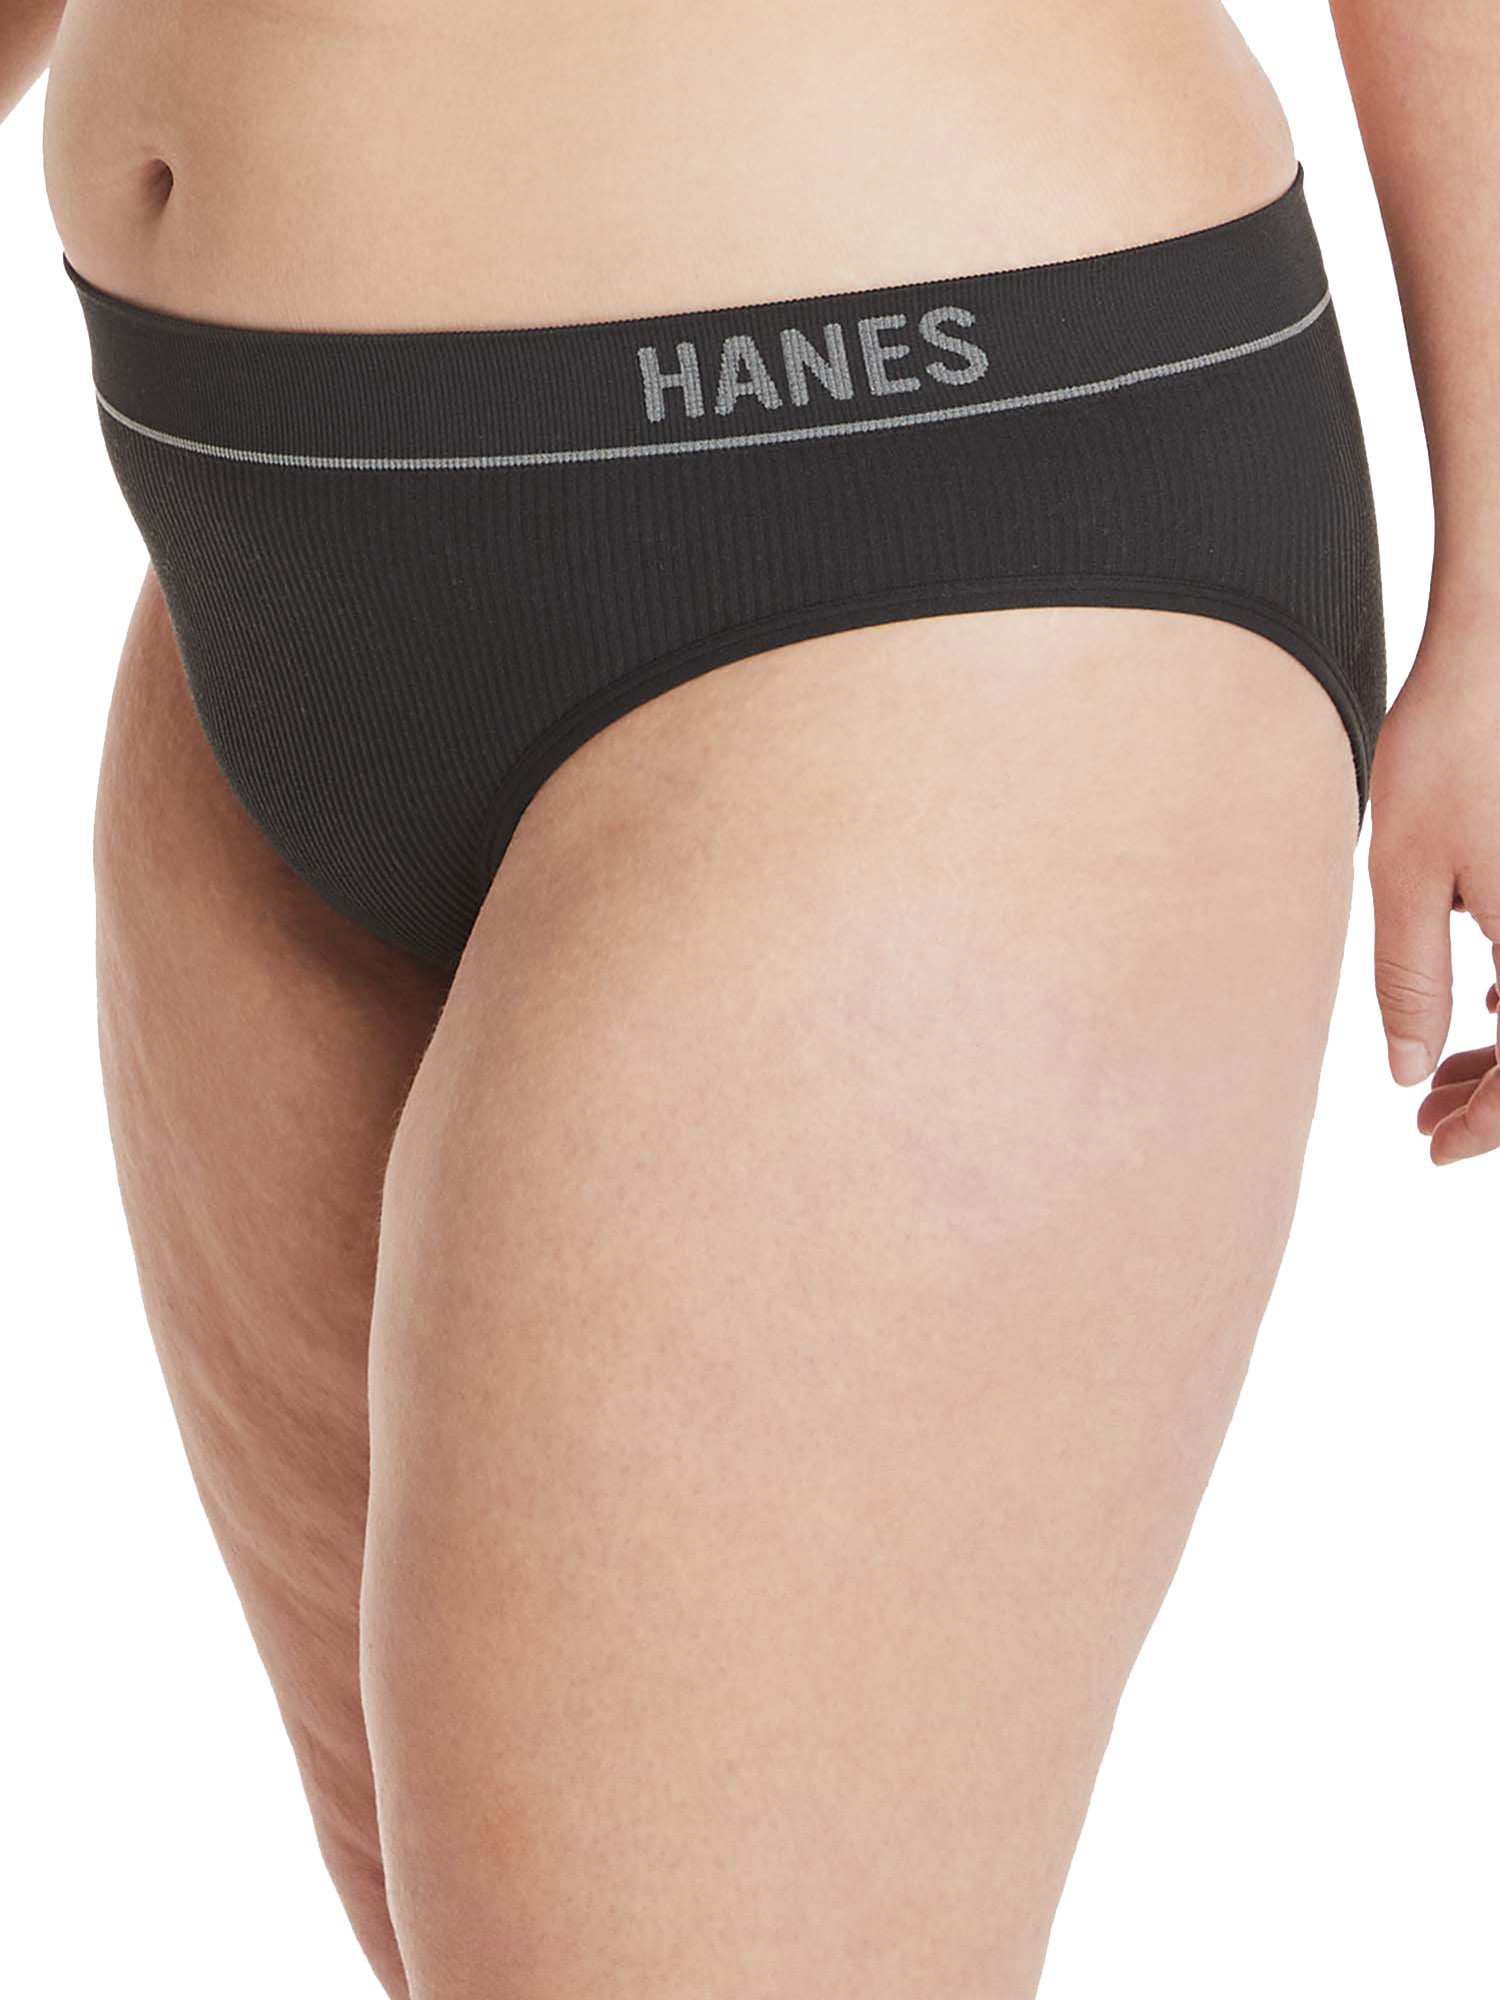 Hanes Originals Women's 3pk Ribbed Bikini Underwear - Gold/White/Pink XXL 3  ct